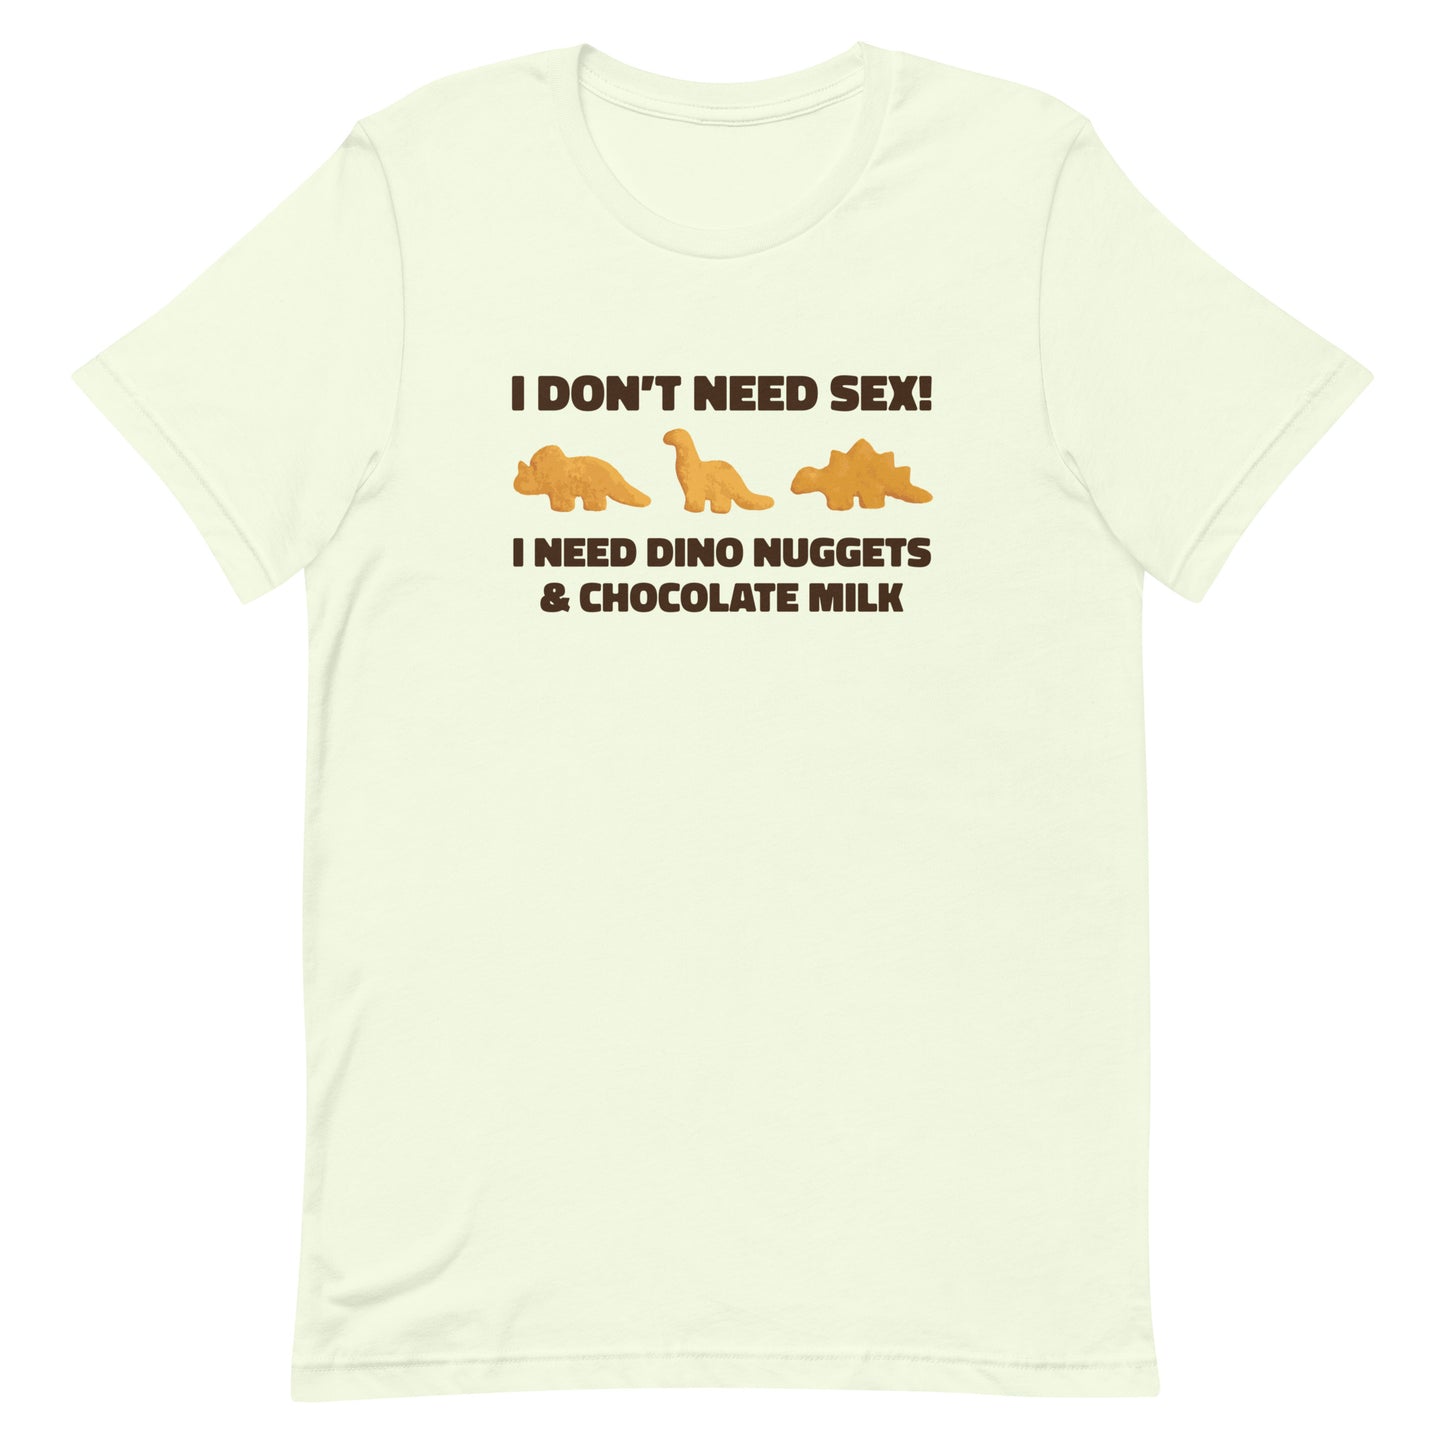 I Need Dino Nuggets and Chocolate Milk Unisex t-shirt